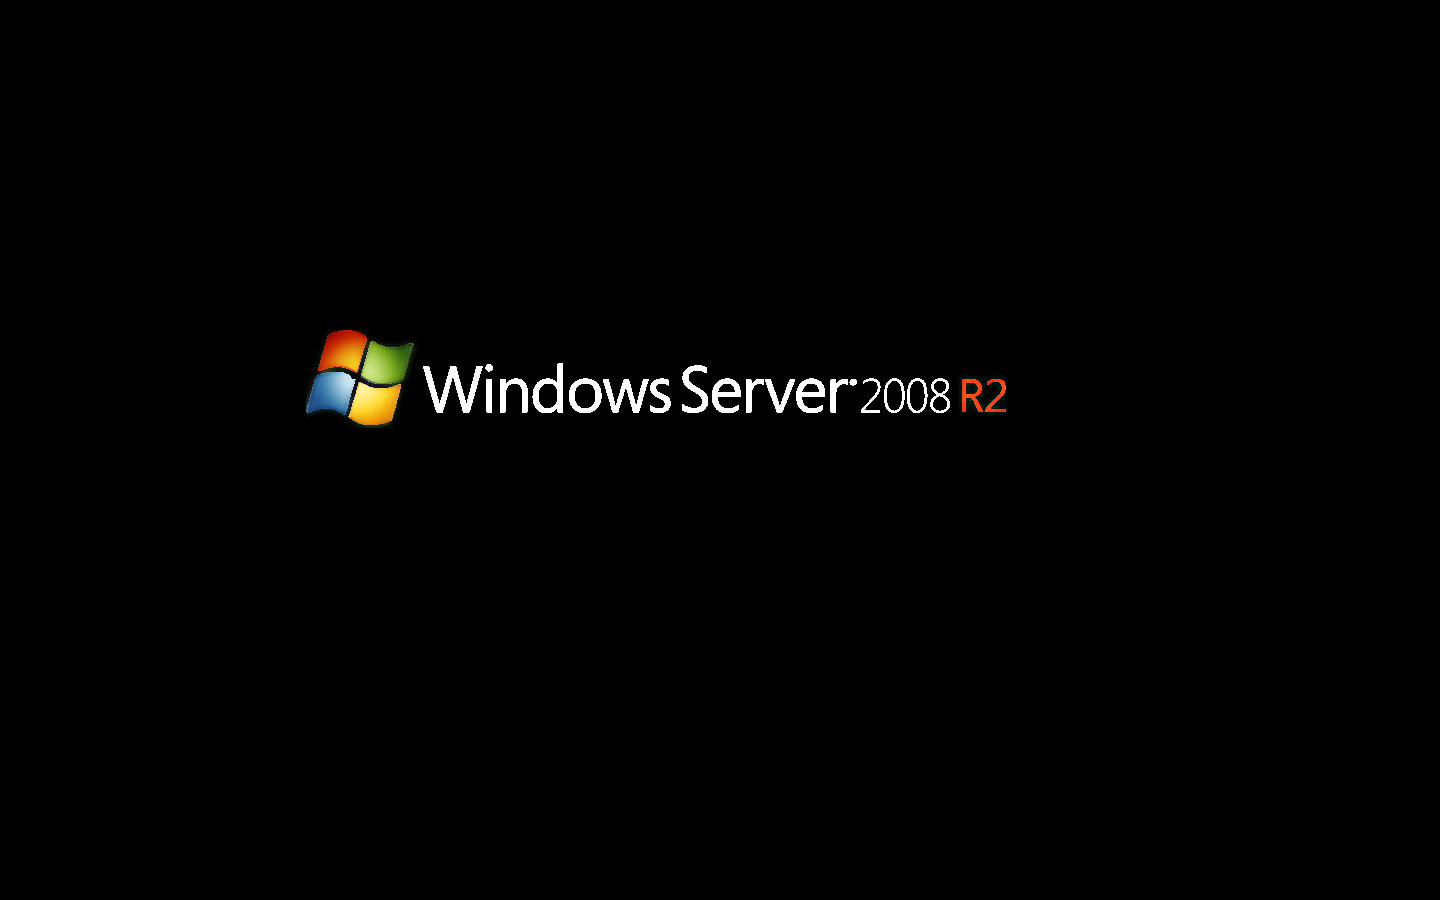 Windows Server 2008 Wallpaper